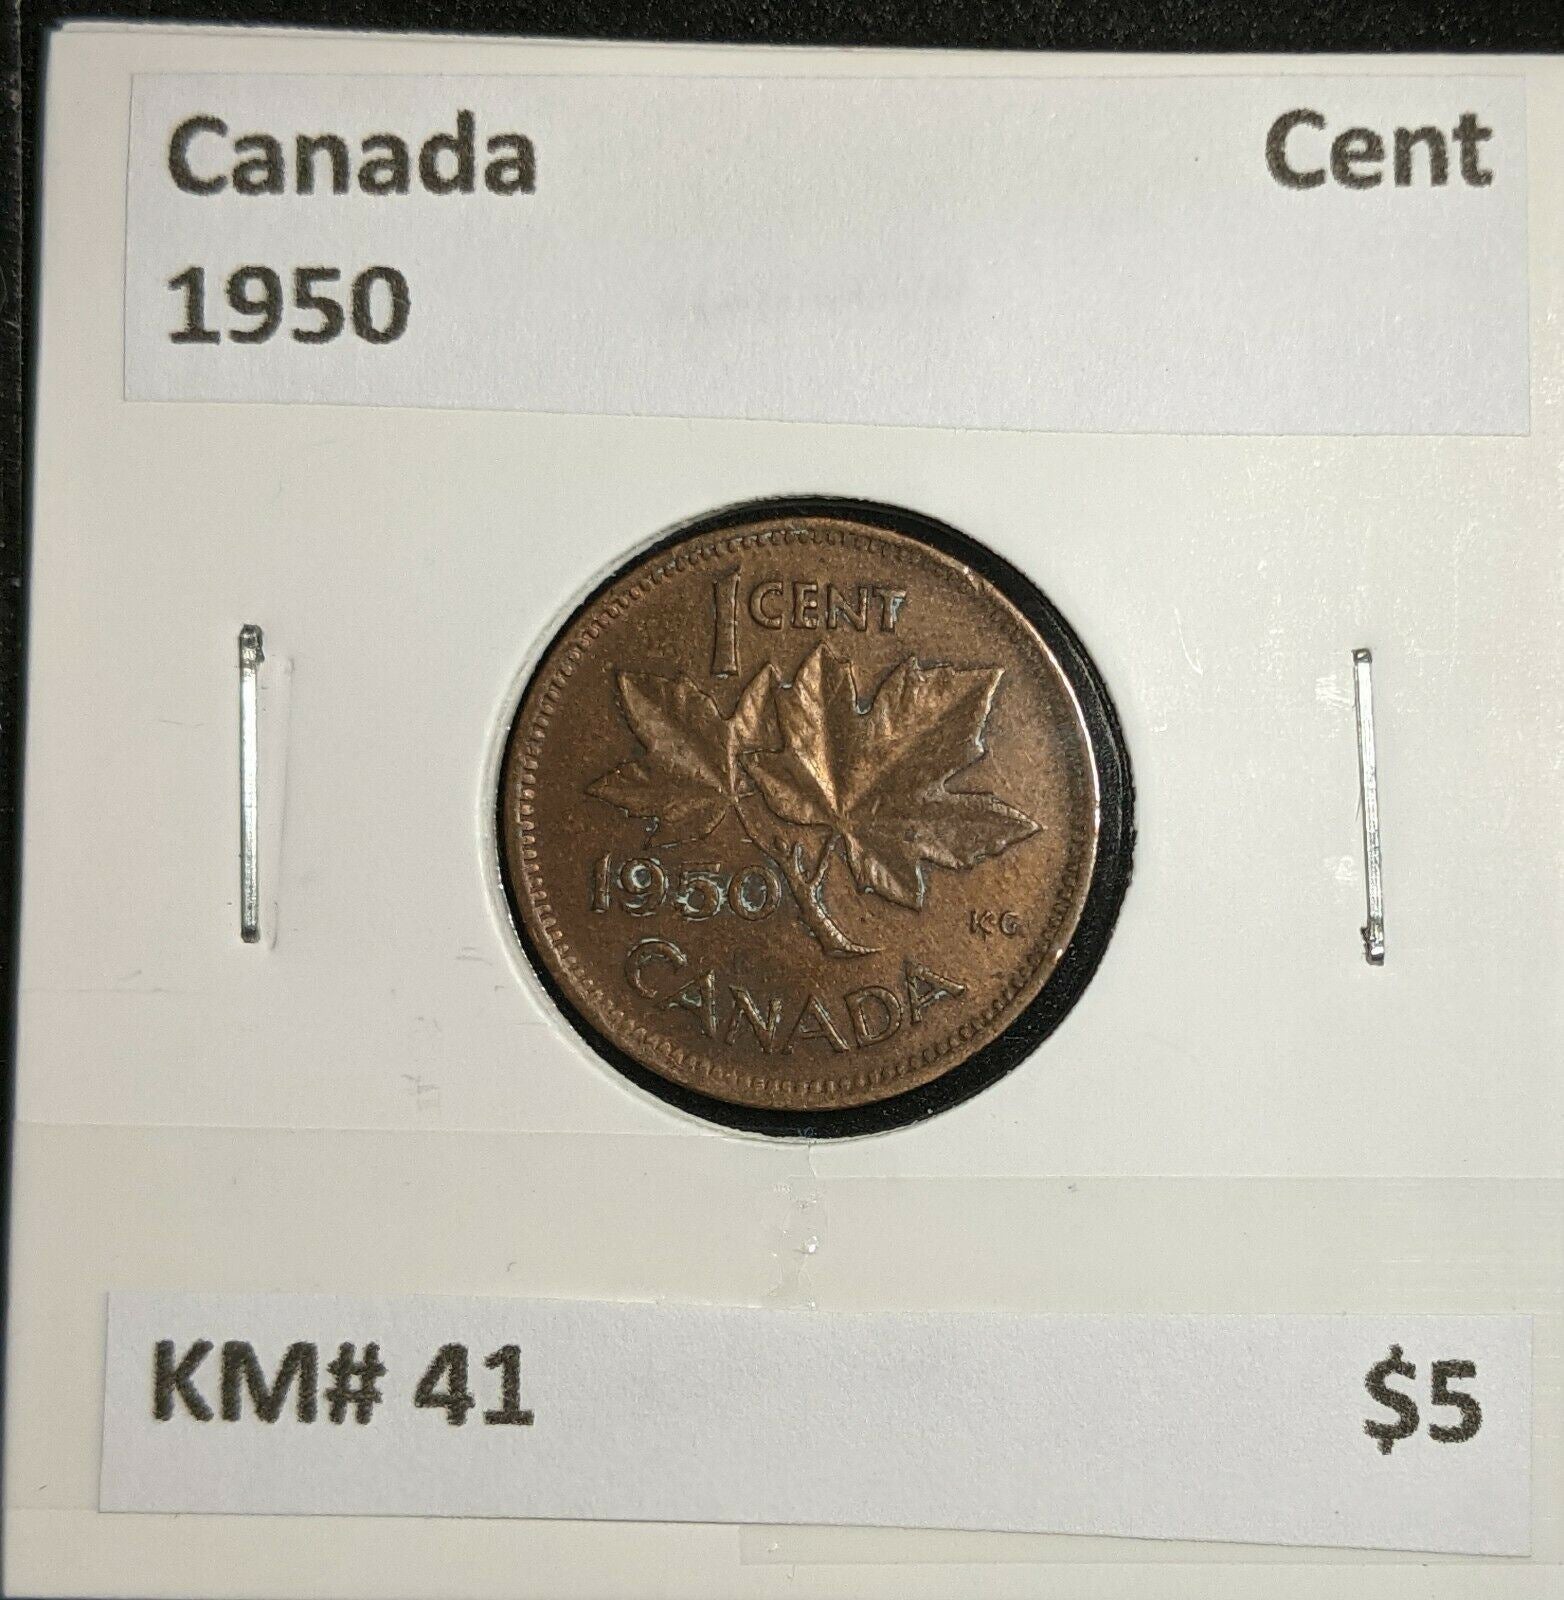 Canada 1950 Cent KM# 41 #593